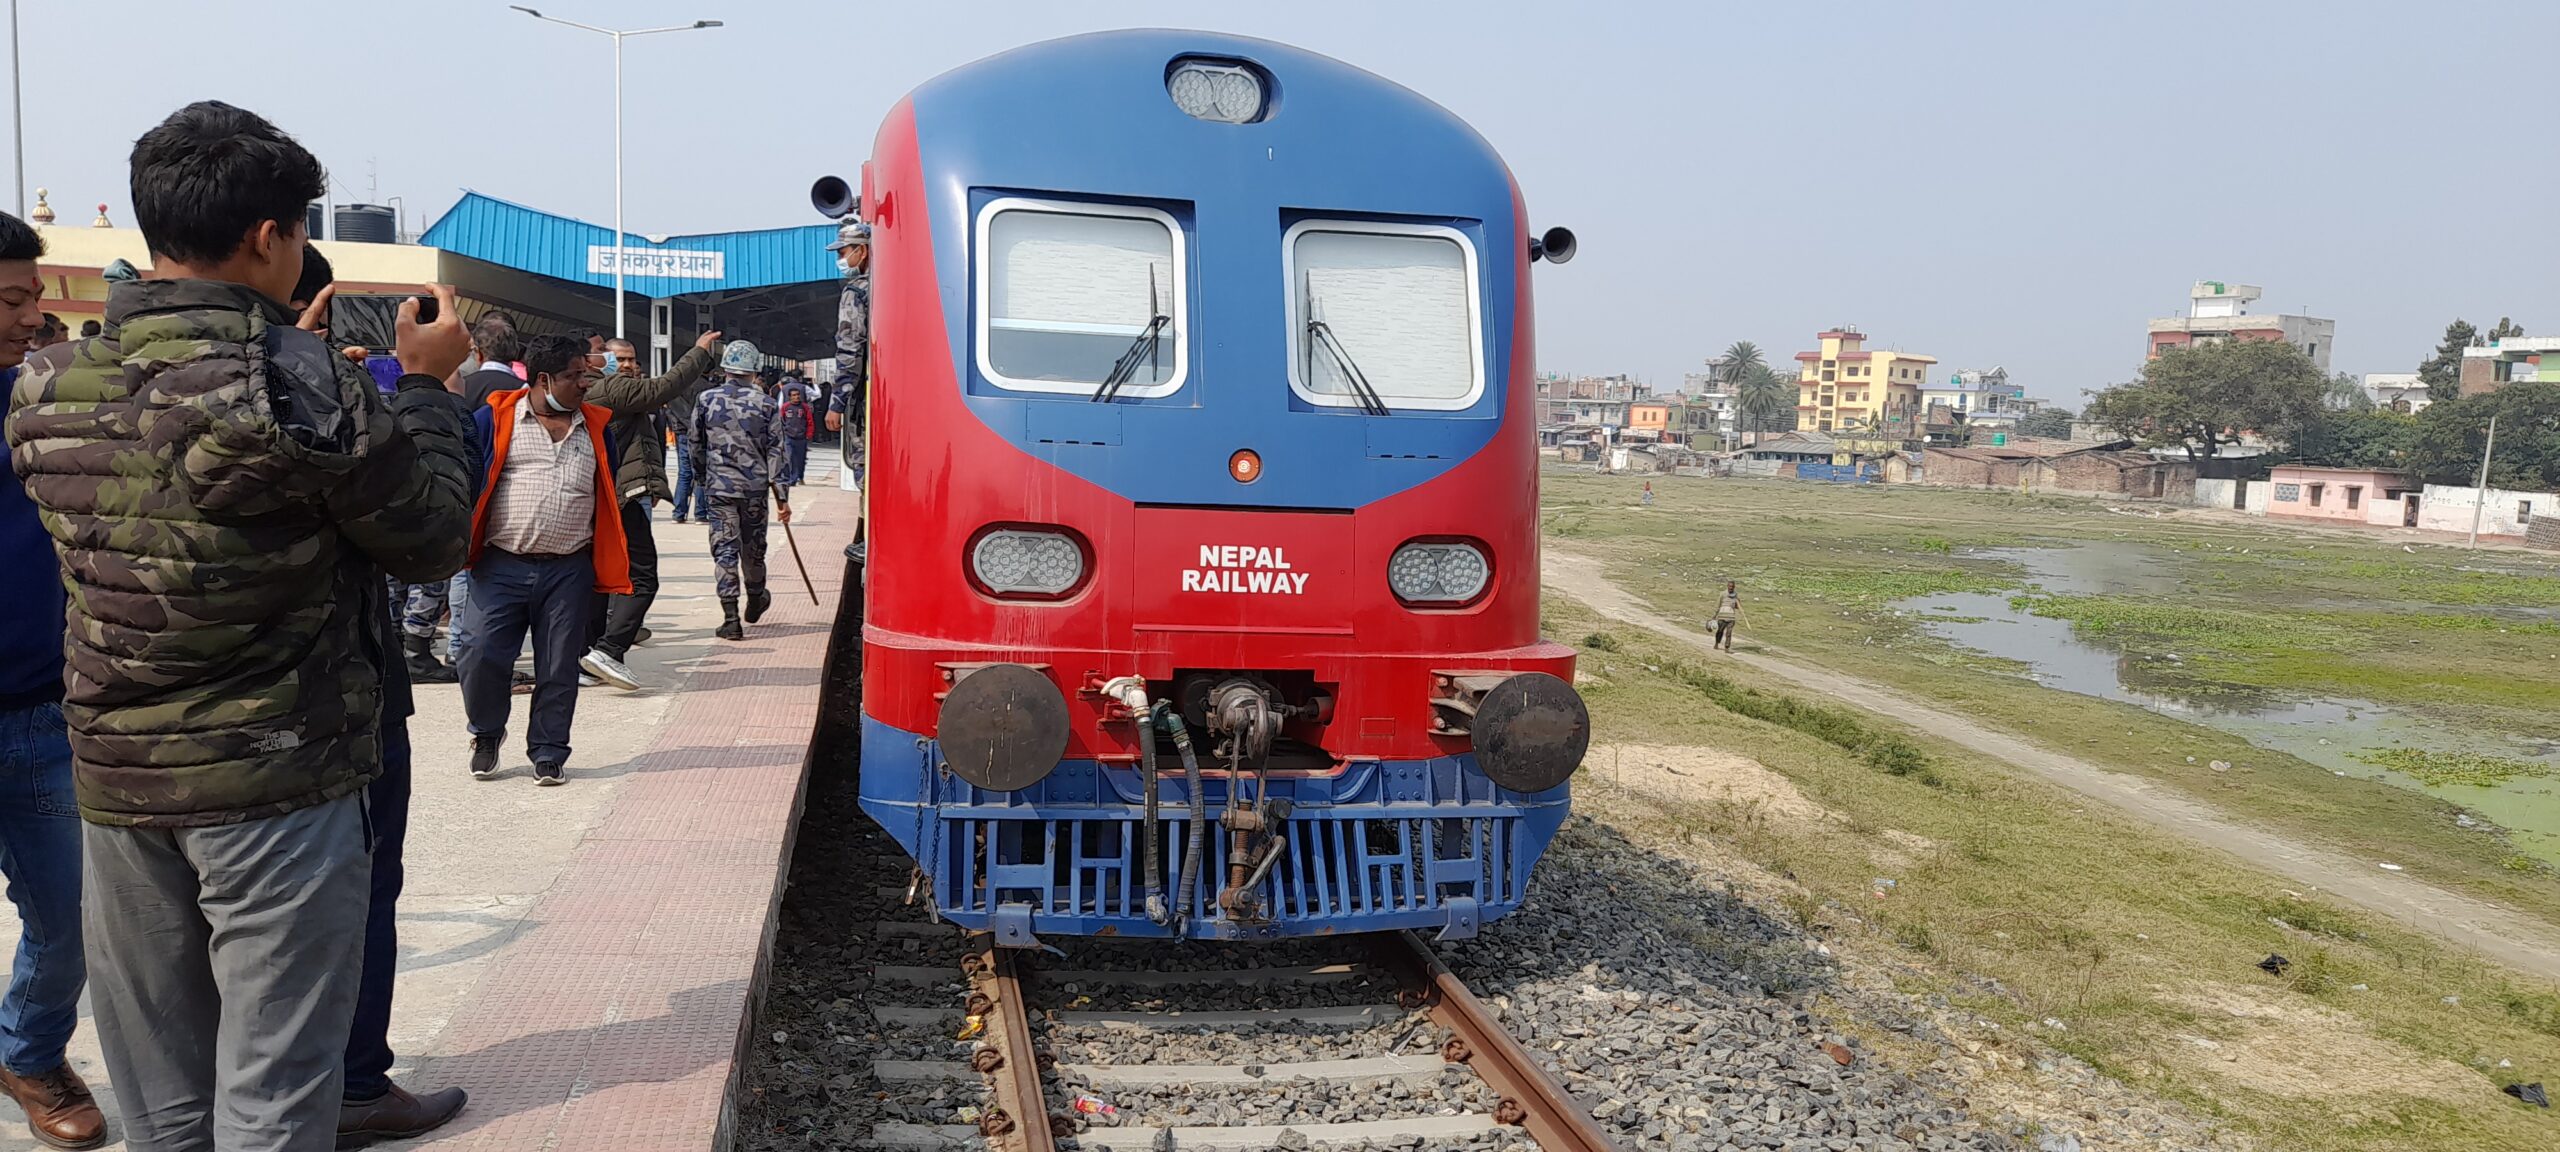 nepal railway